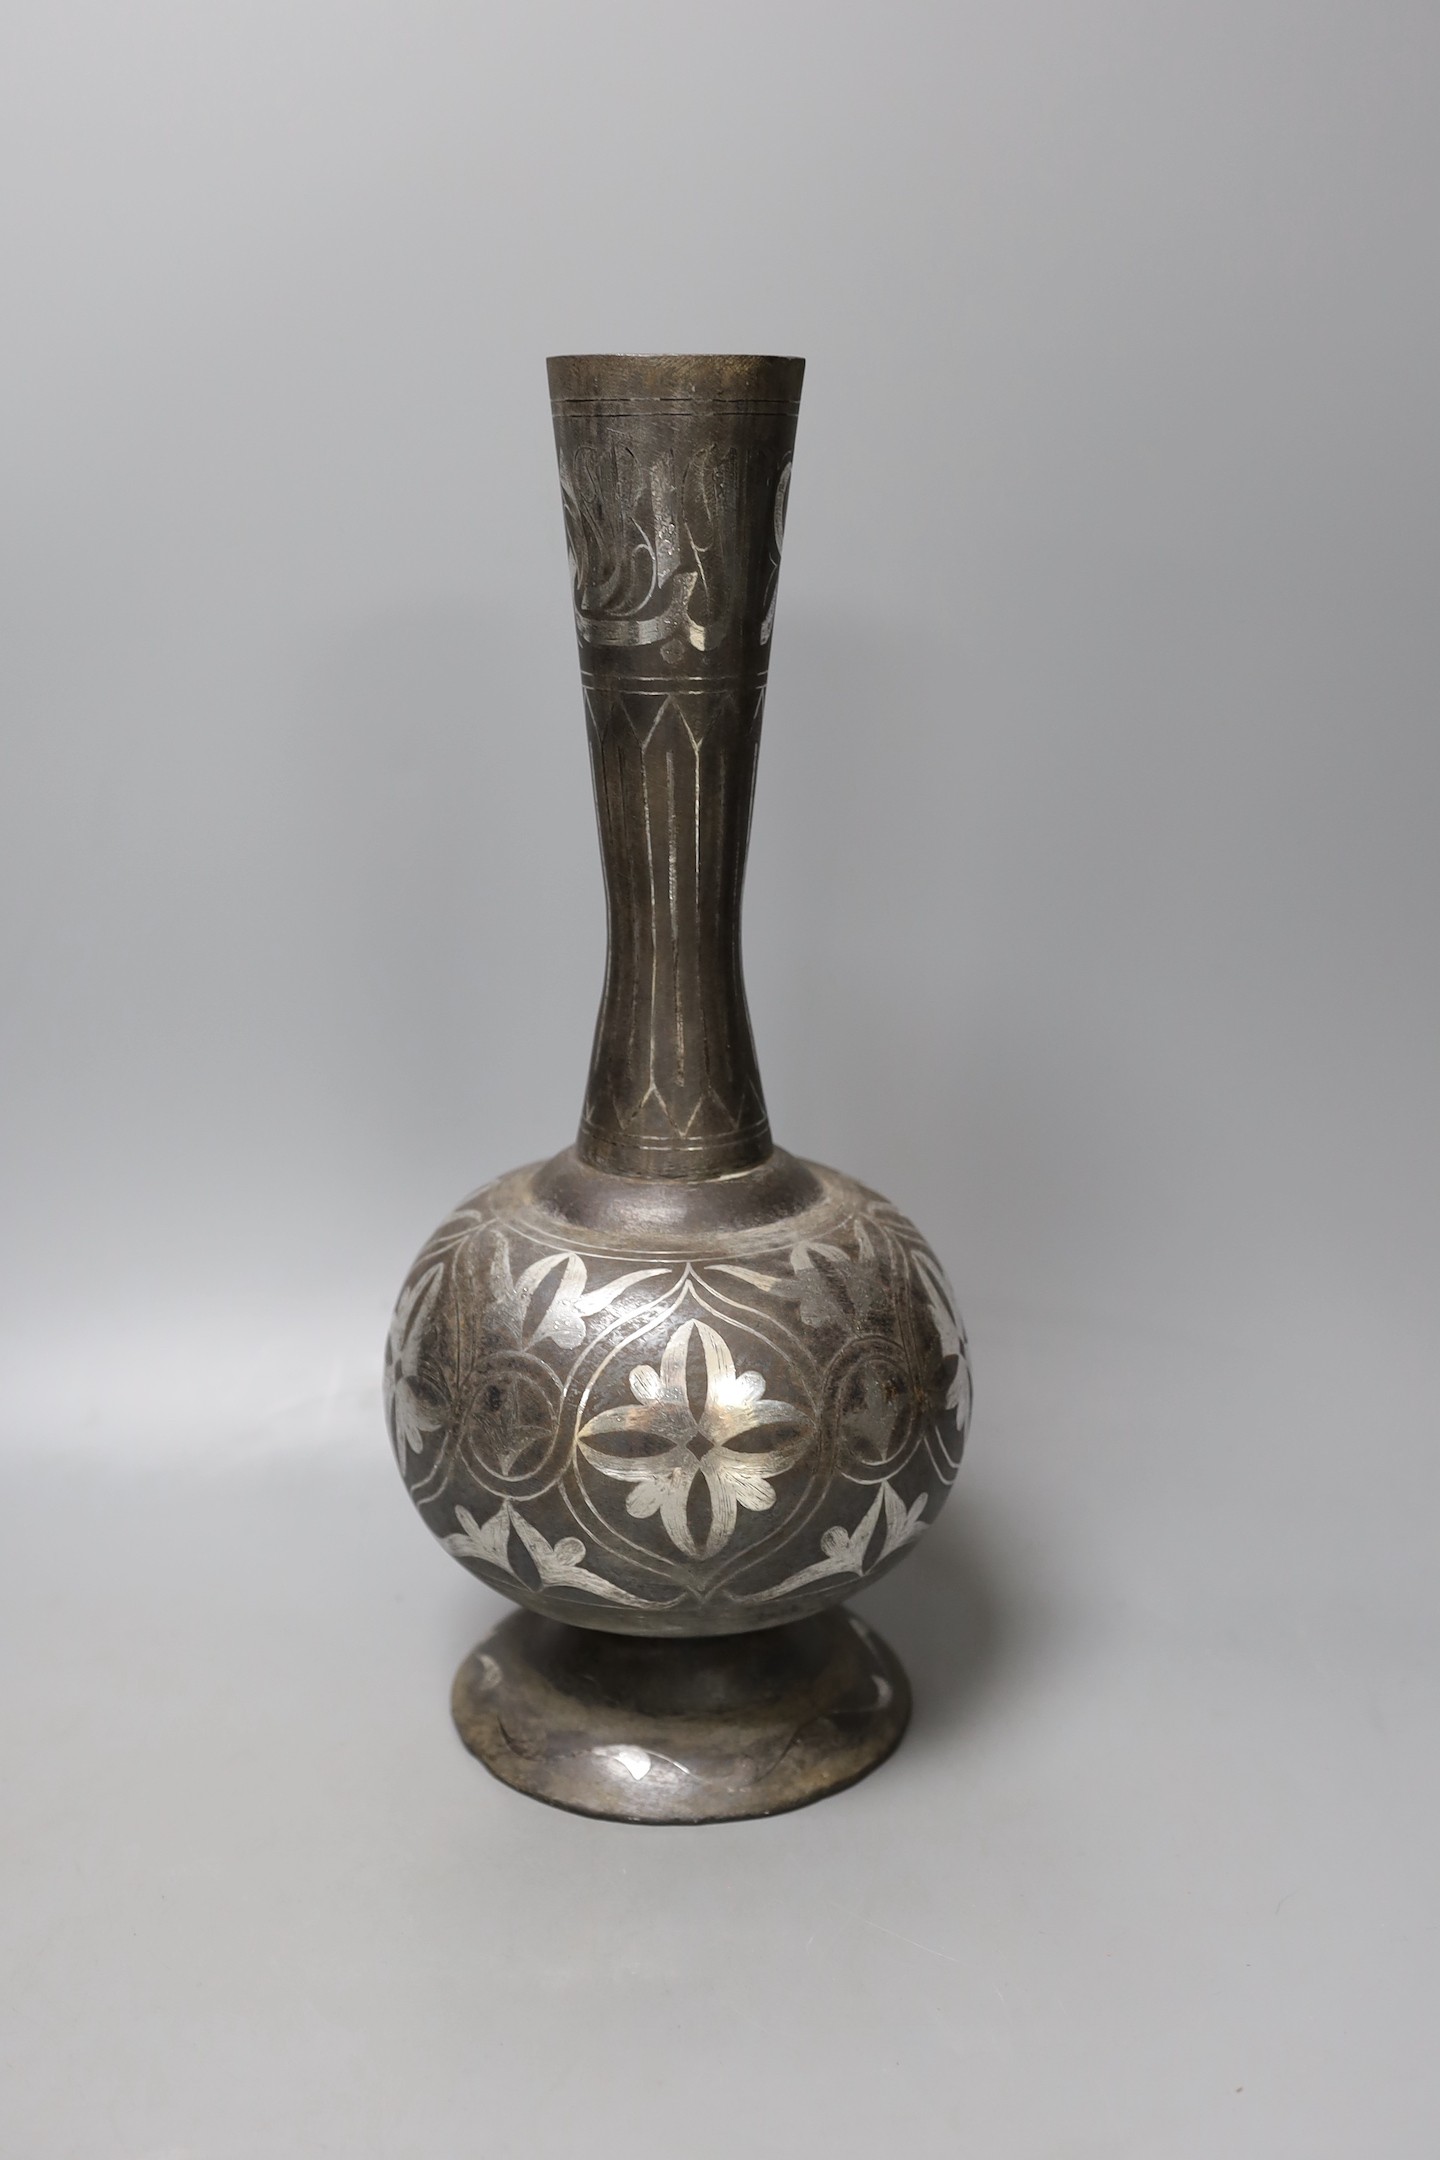 An Indian Bidriware vase, 34 cms high.